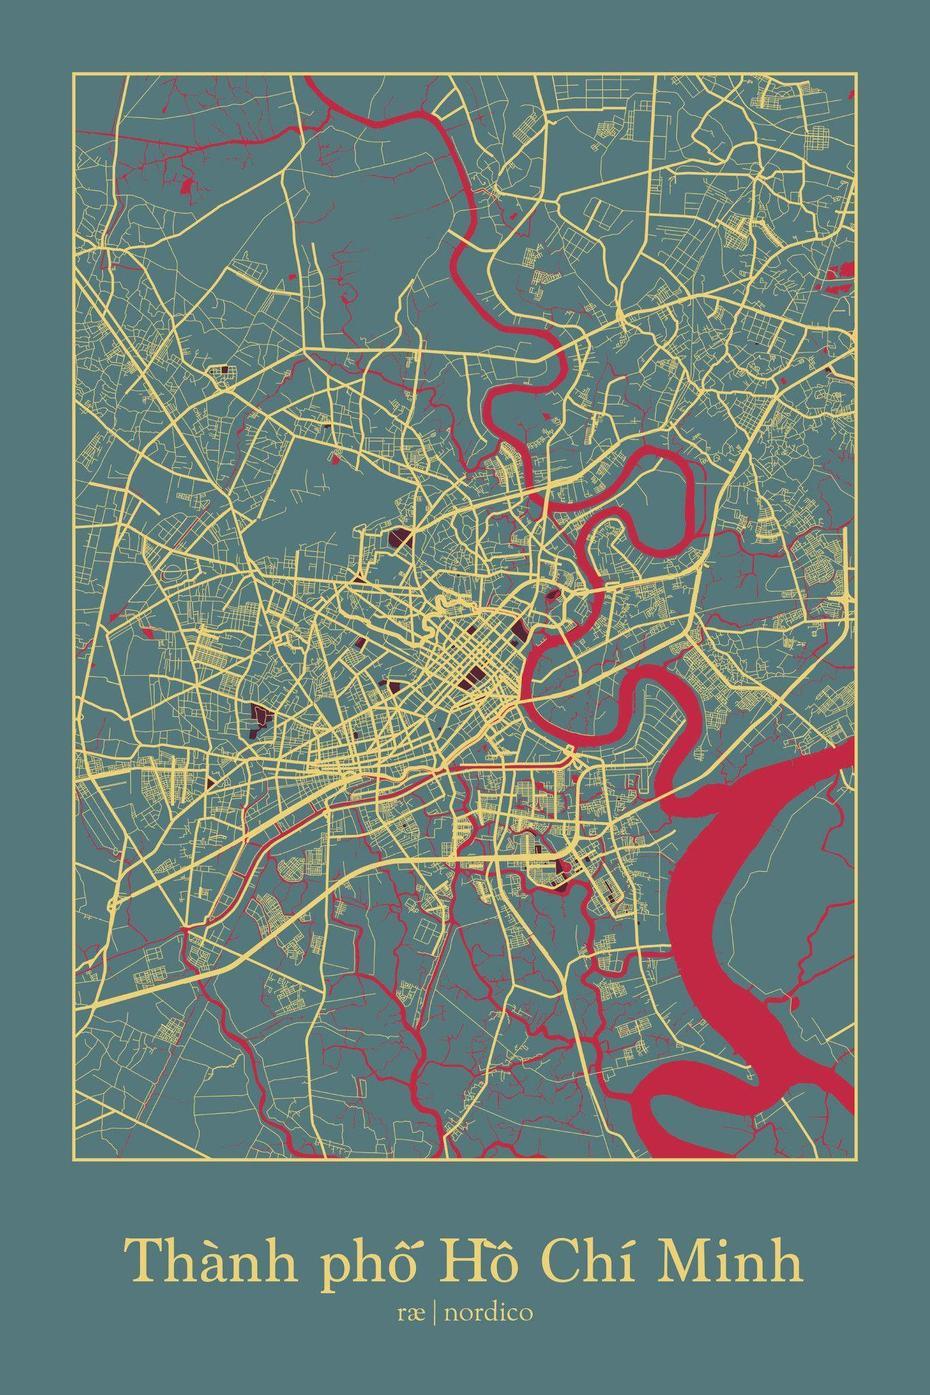 Ho Chi Minh City, Vietnam Map Print | Map Print, Vietnam Map, Map Layout, Ho Chi Minh City, Vietnam, District 1 Ho Chi Minh City, Saigon South Vietnam